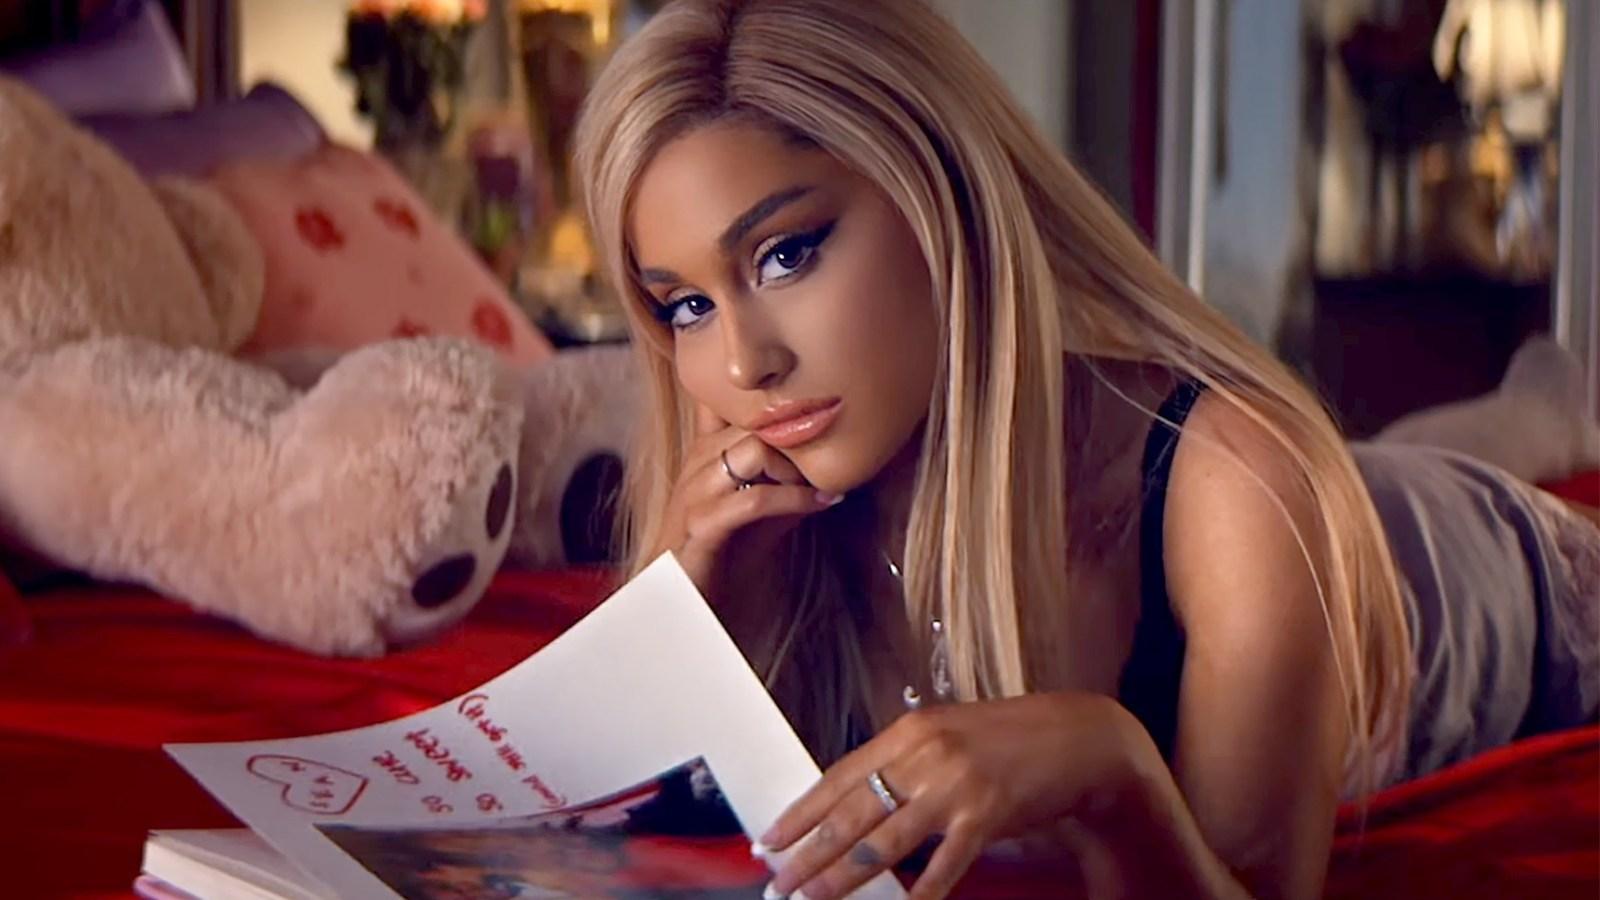 Ariana Grande Slays in 'Thank U, Next' Video With Celeb Cameos